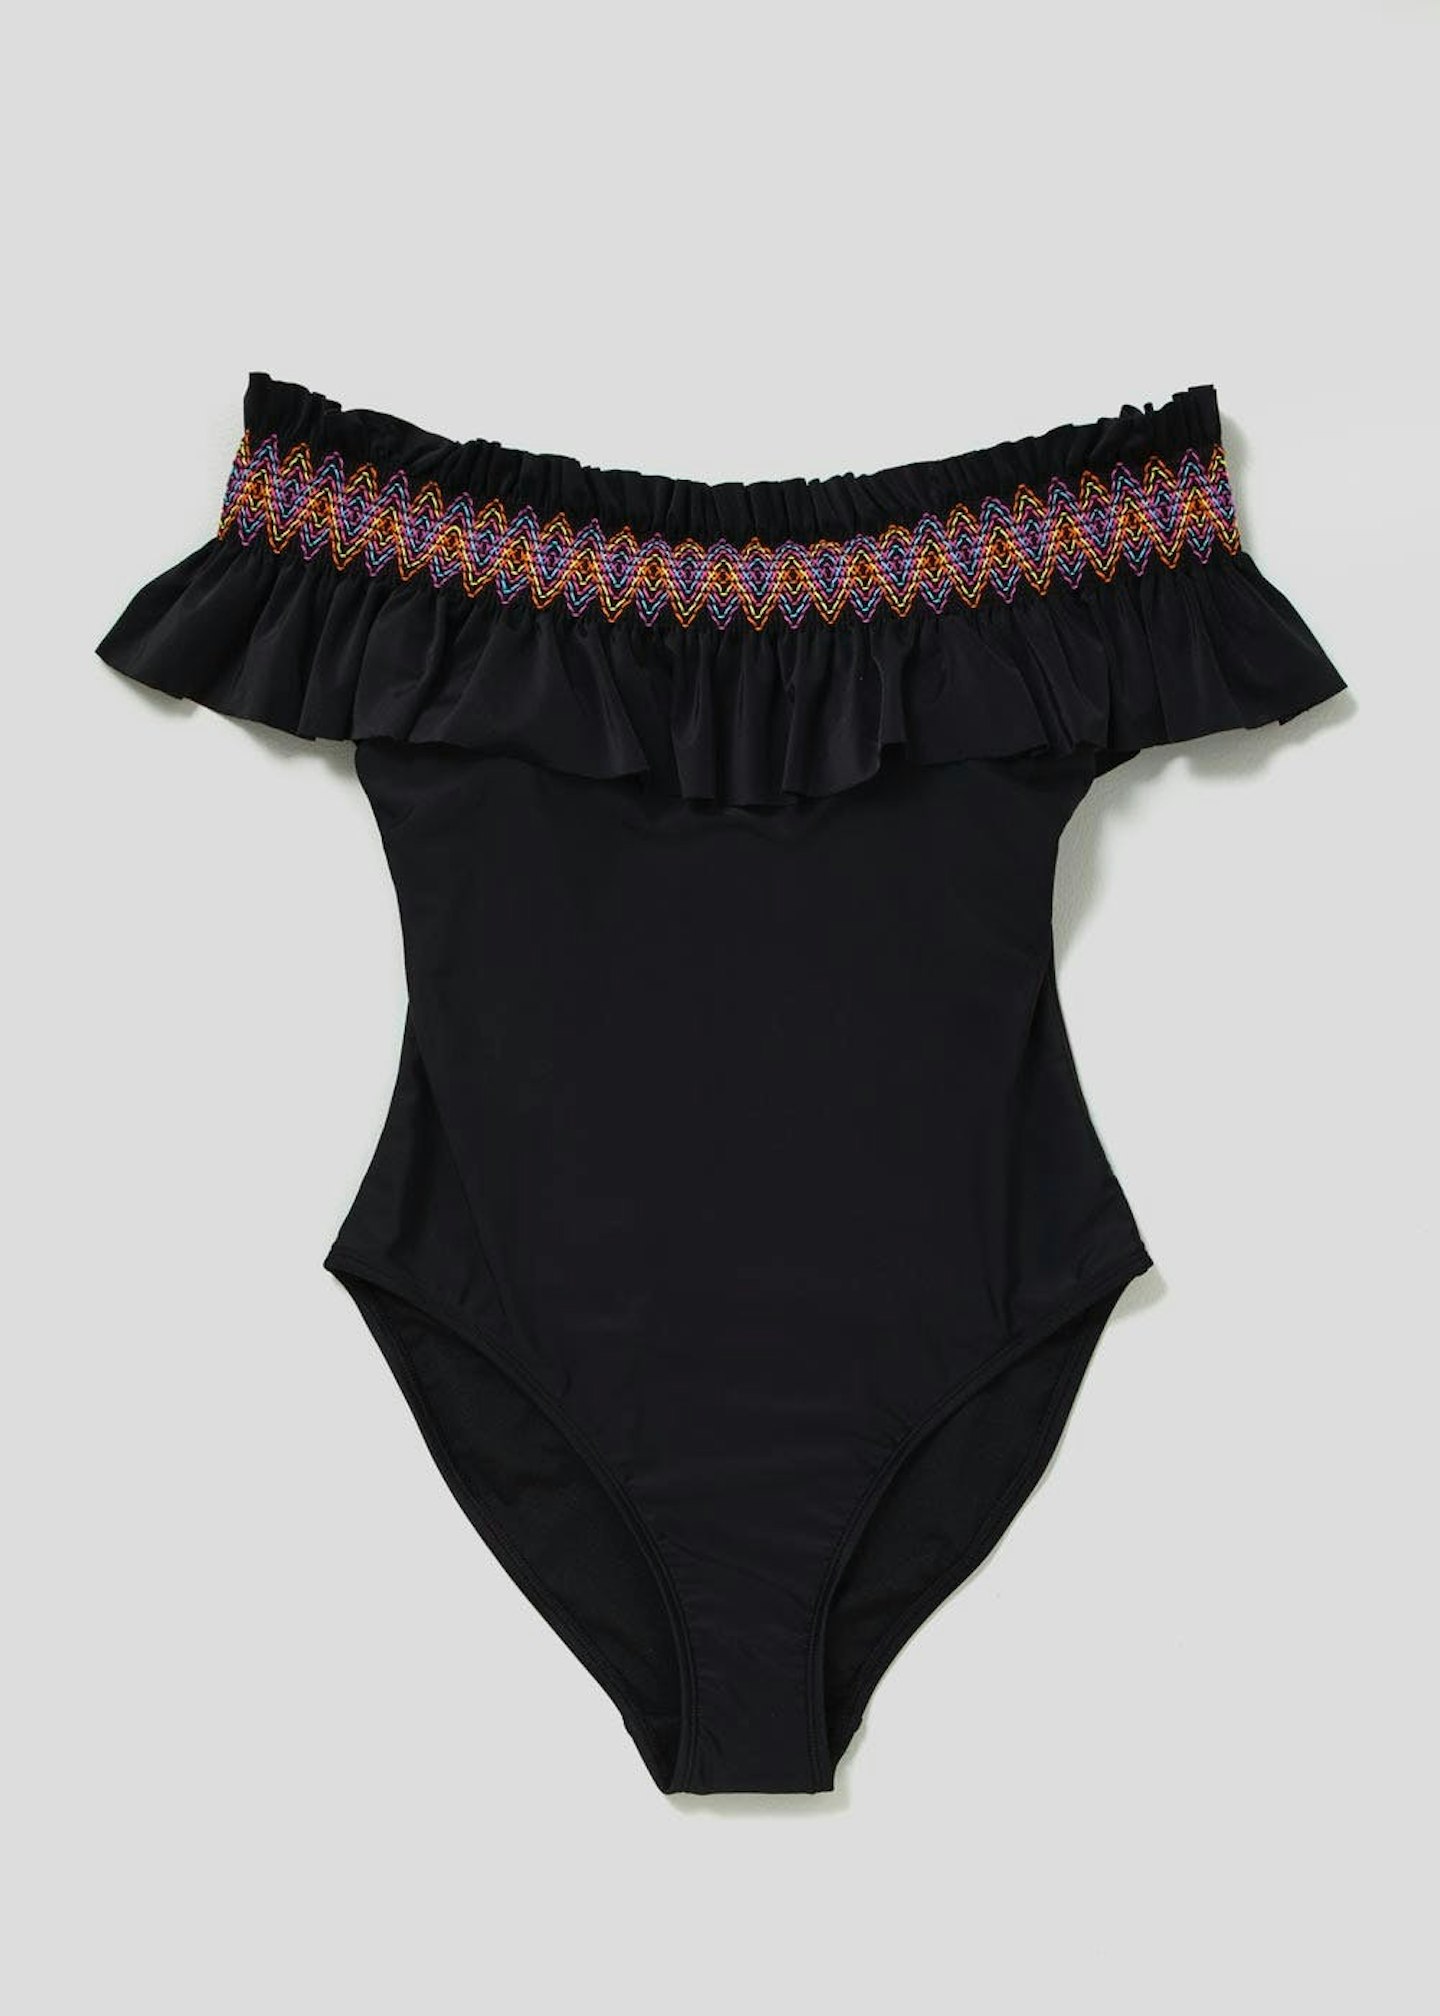 Ruffle swimsuit by Matalan, £16